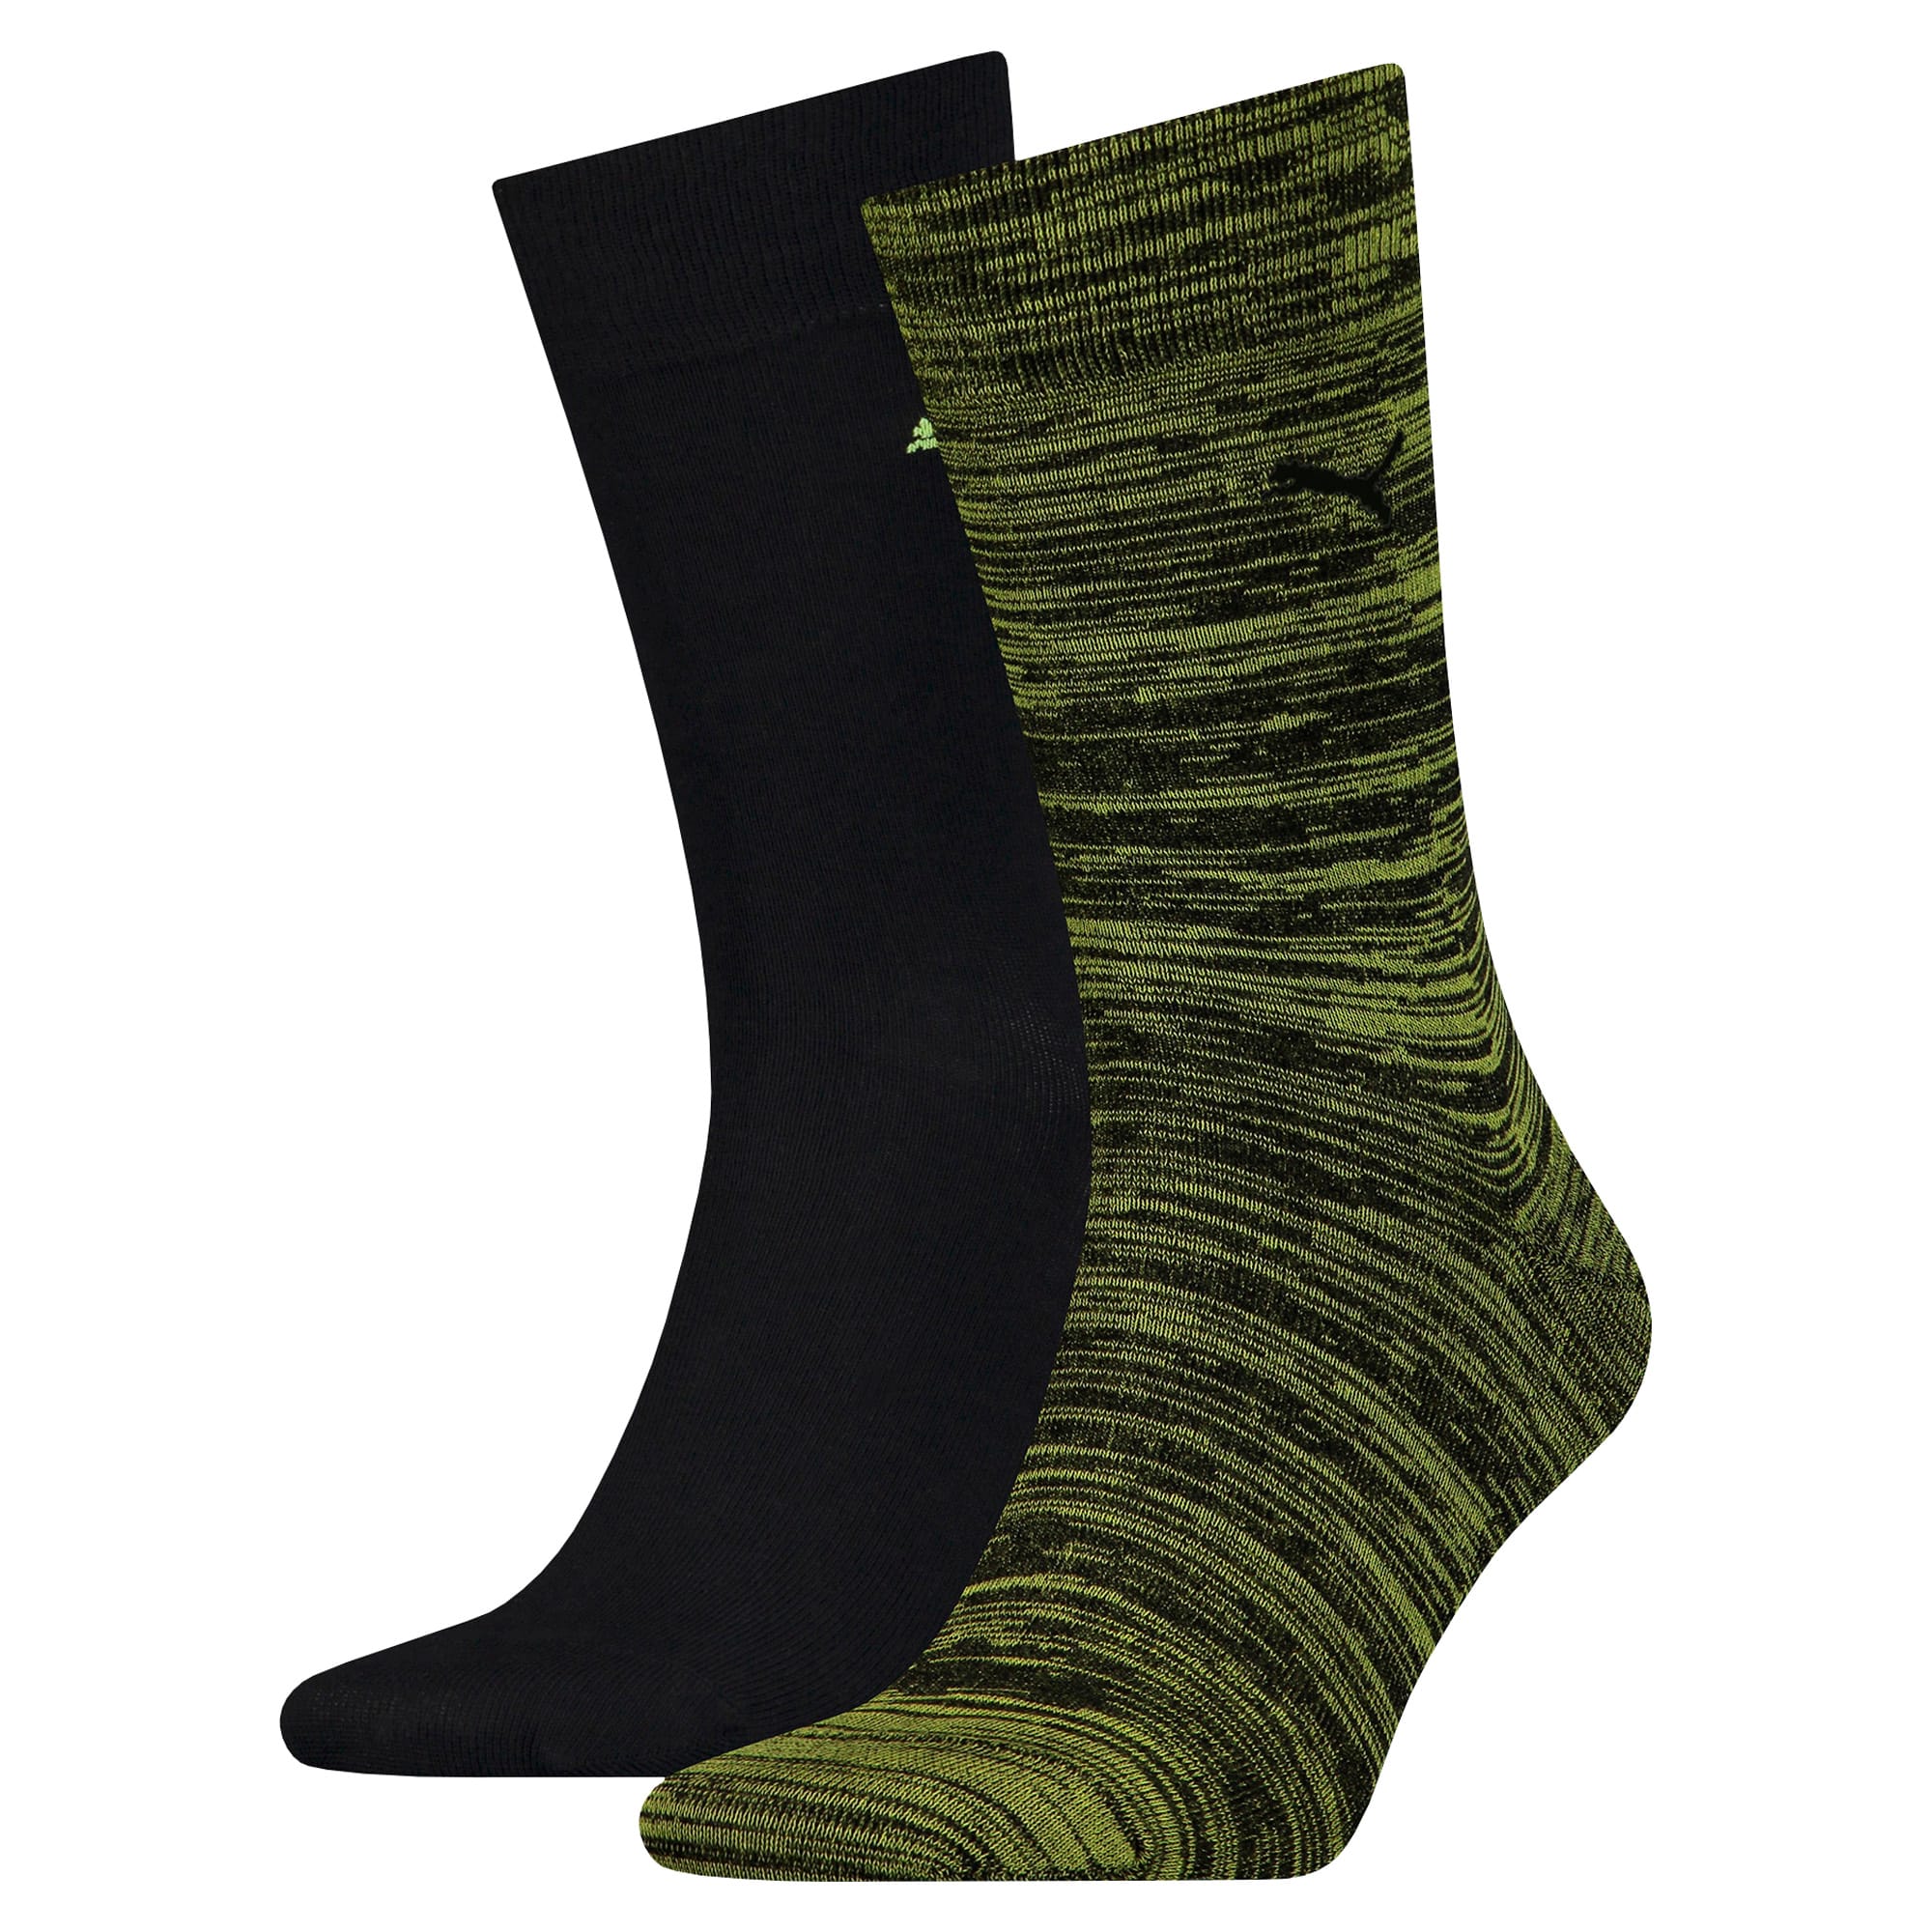 puma socks for sale